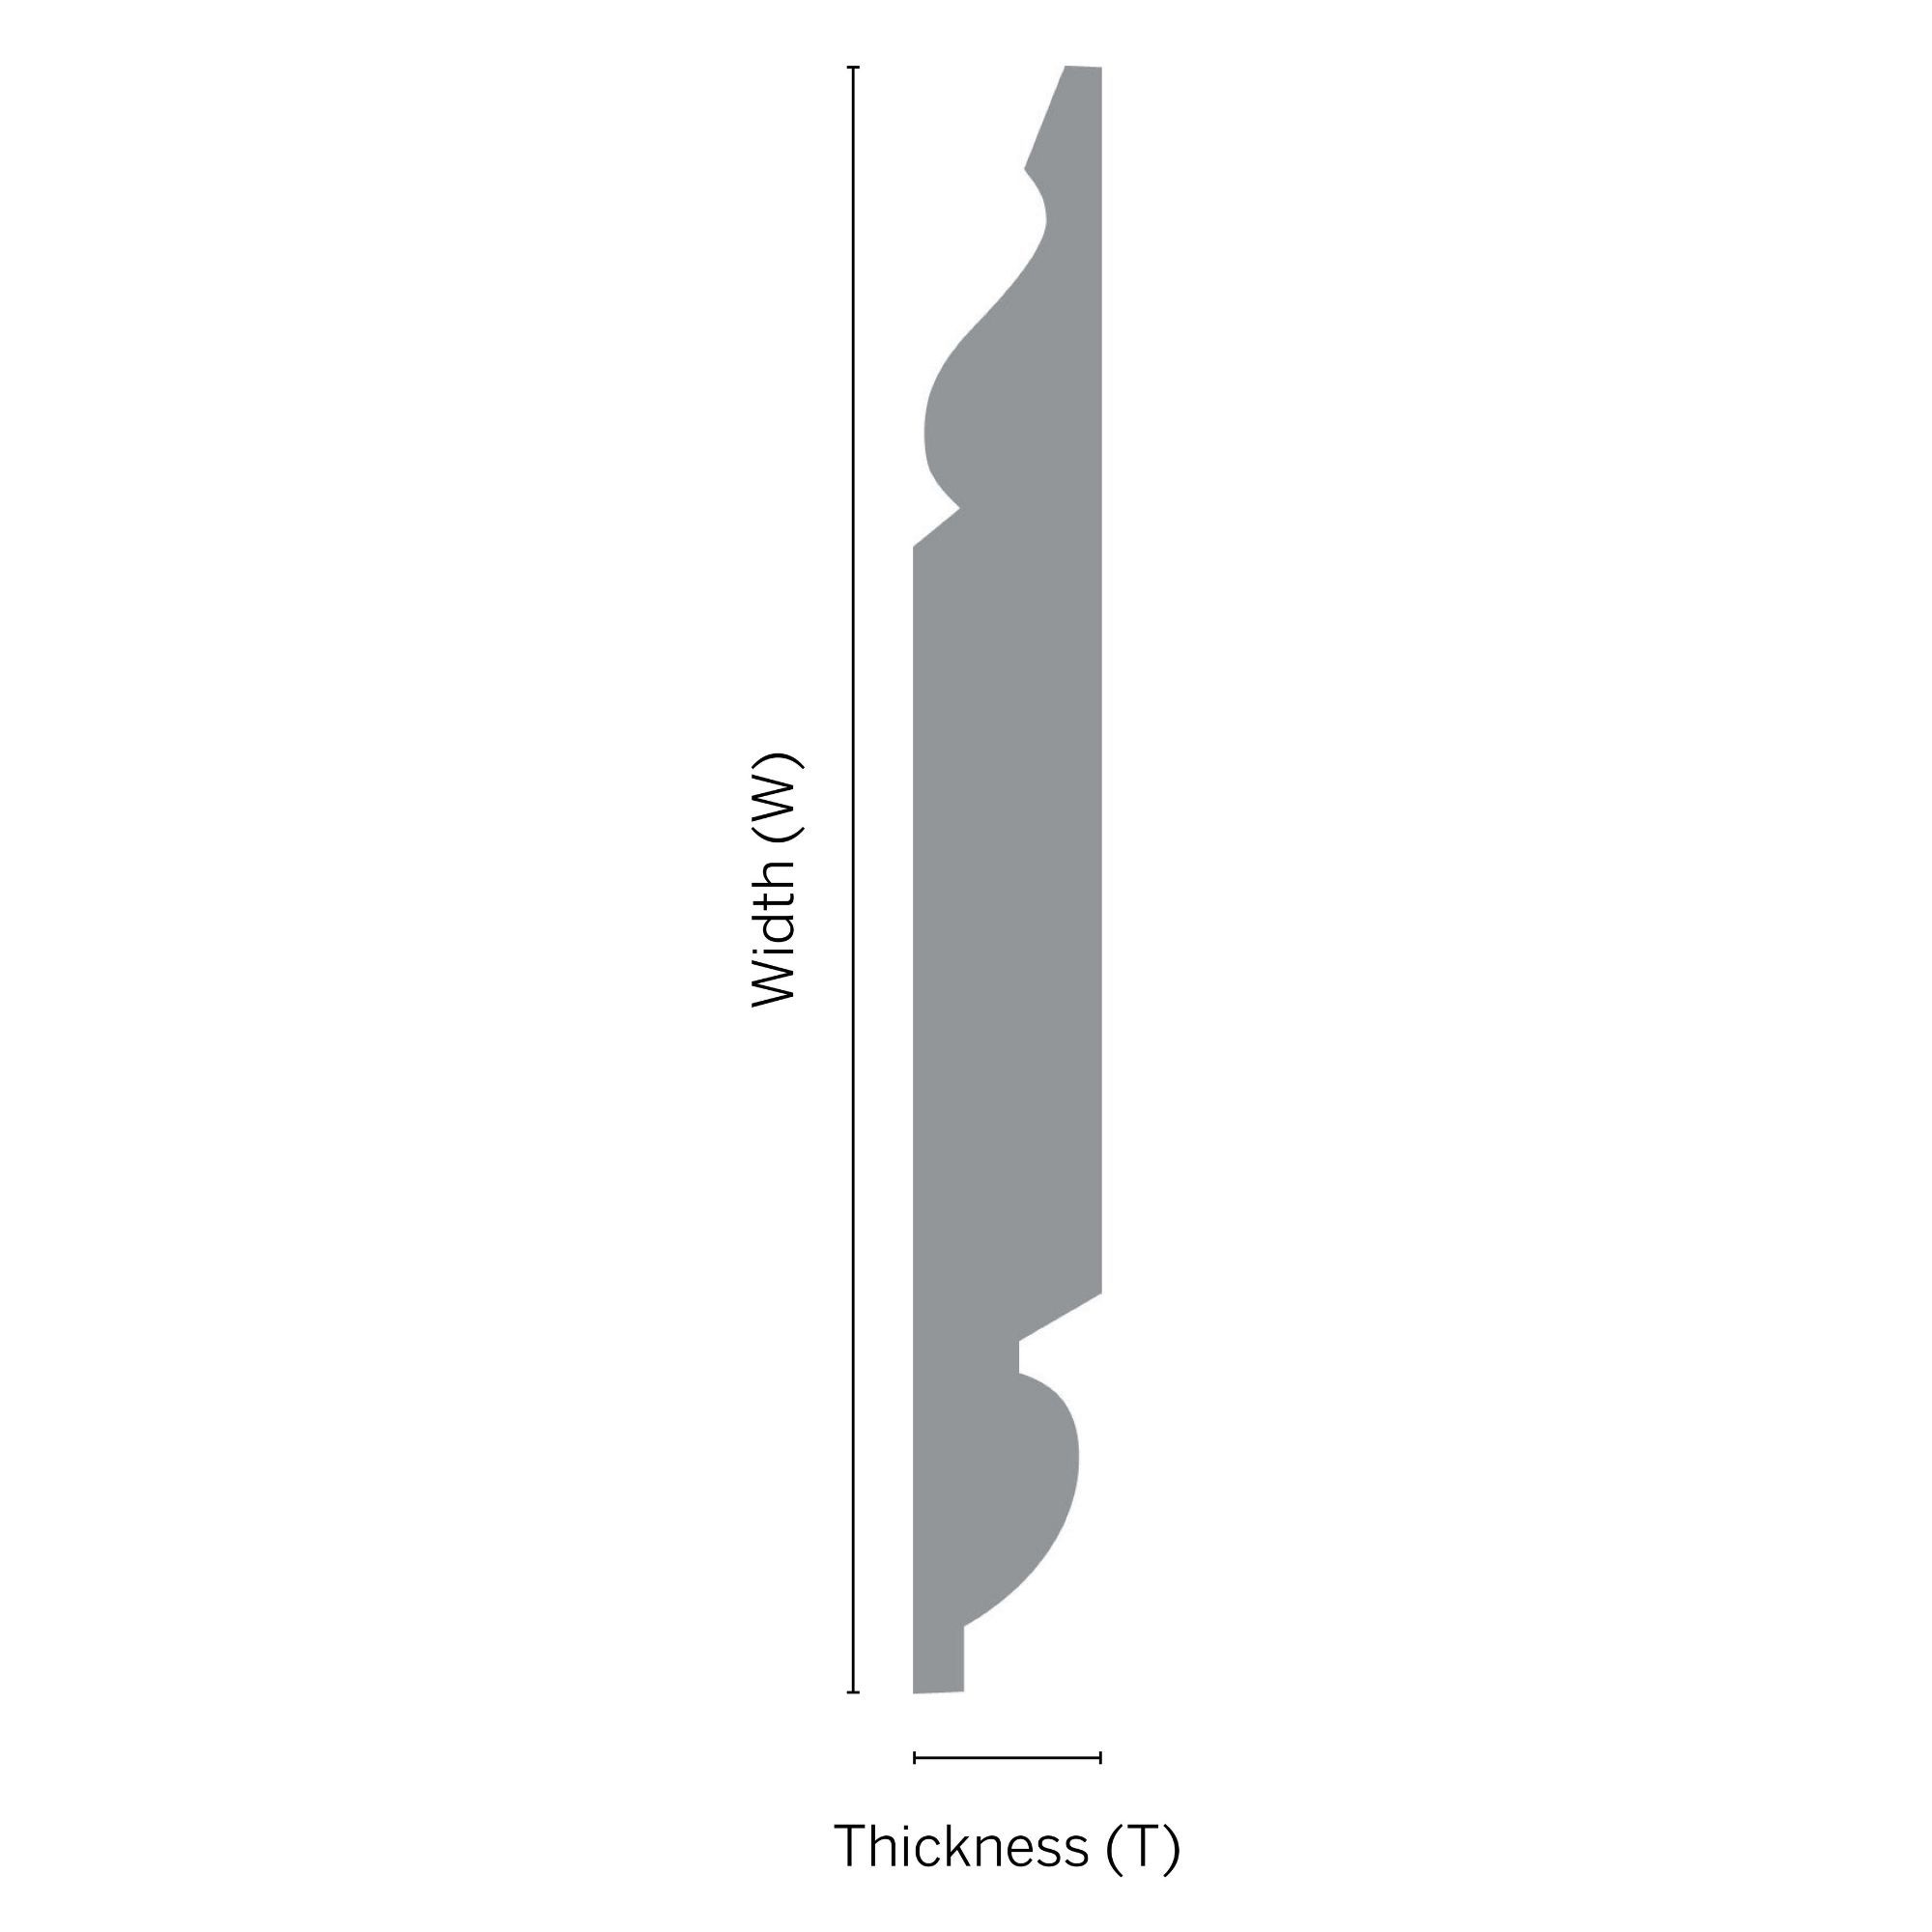 Metsä Wood Pine Dual profile Skirting board (L)3.6m (W)219mm (T)19.5mm